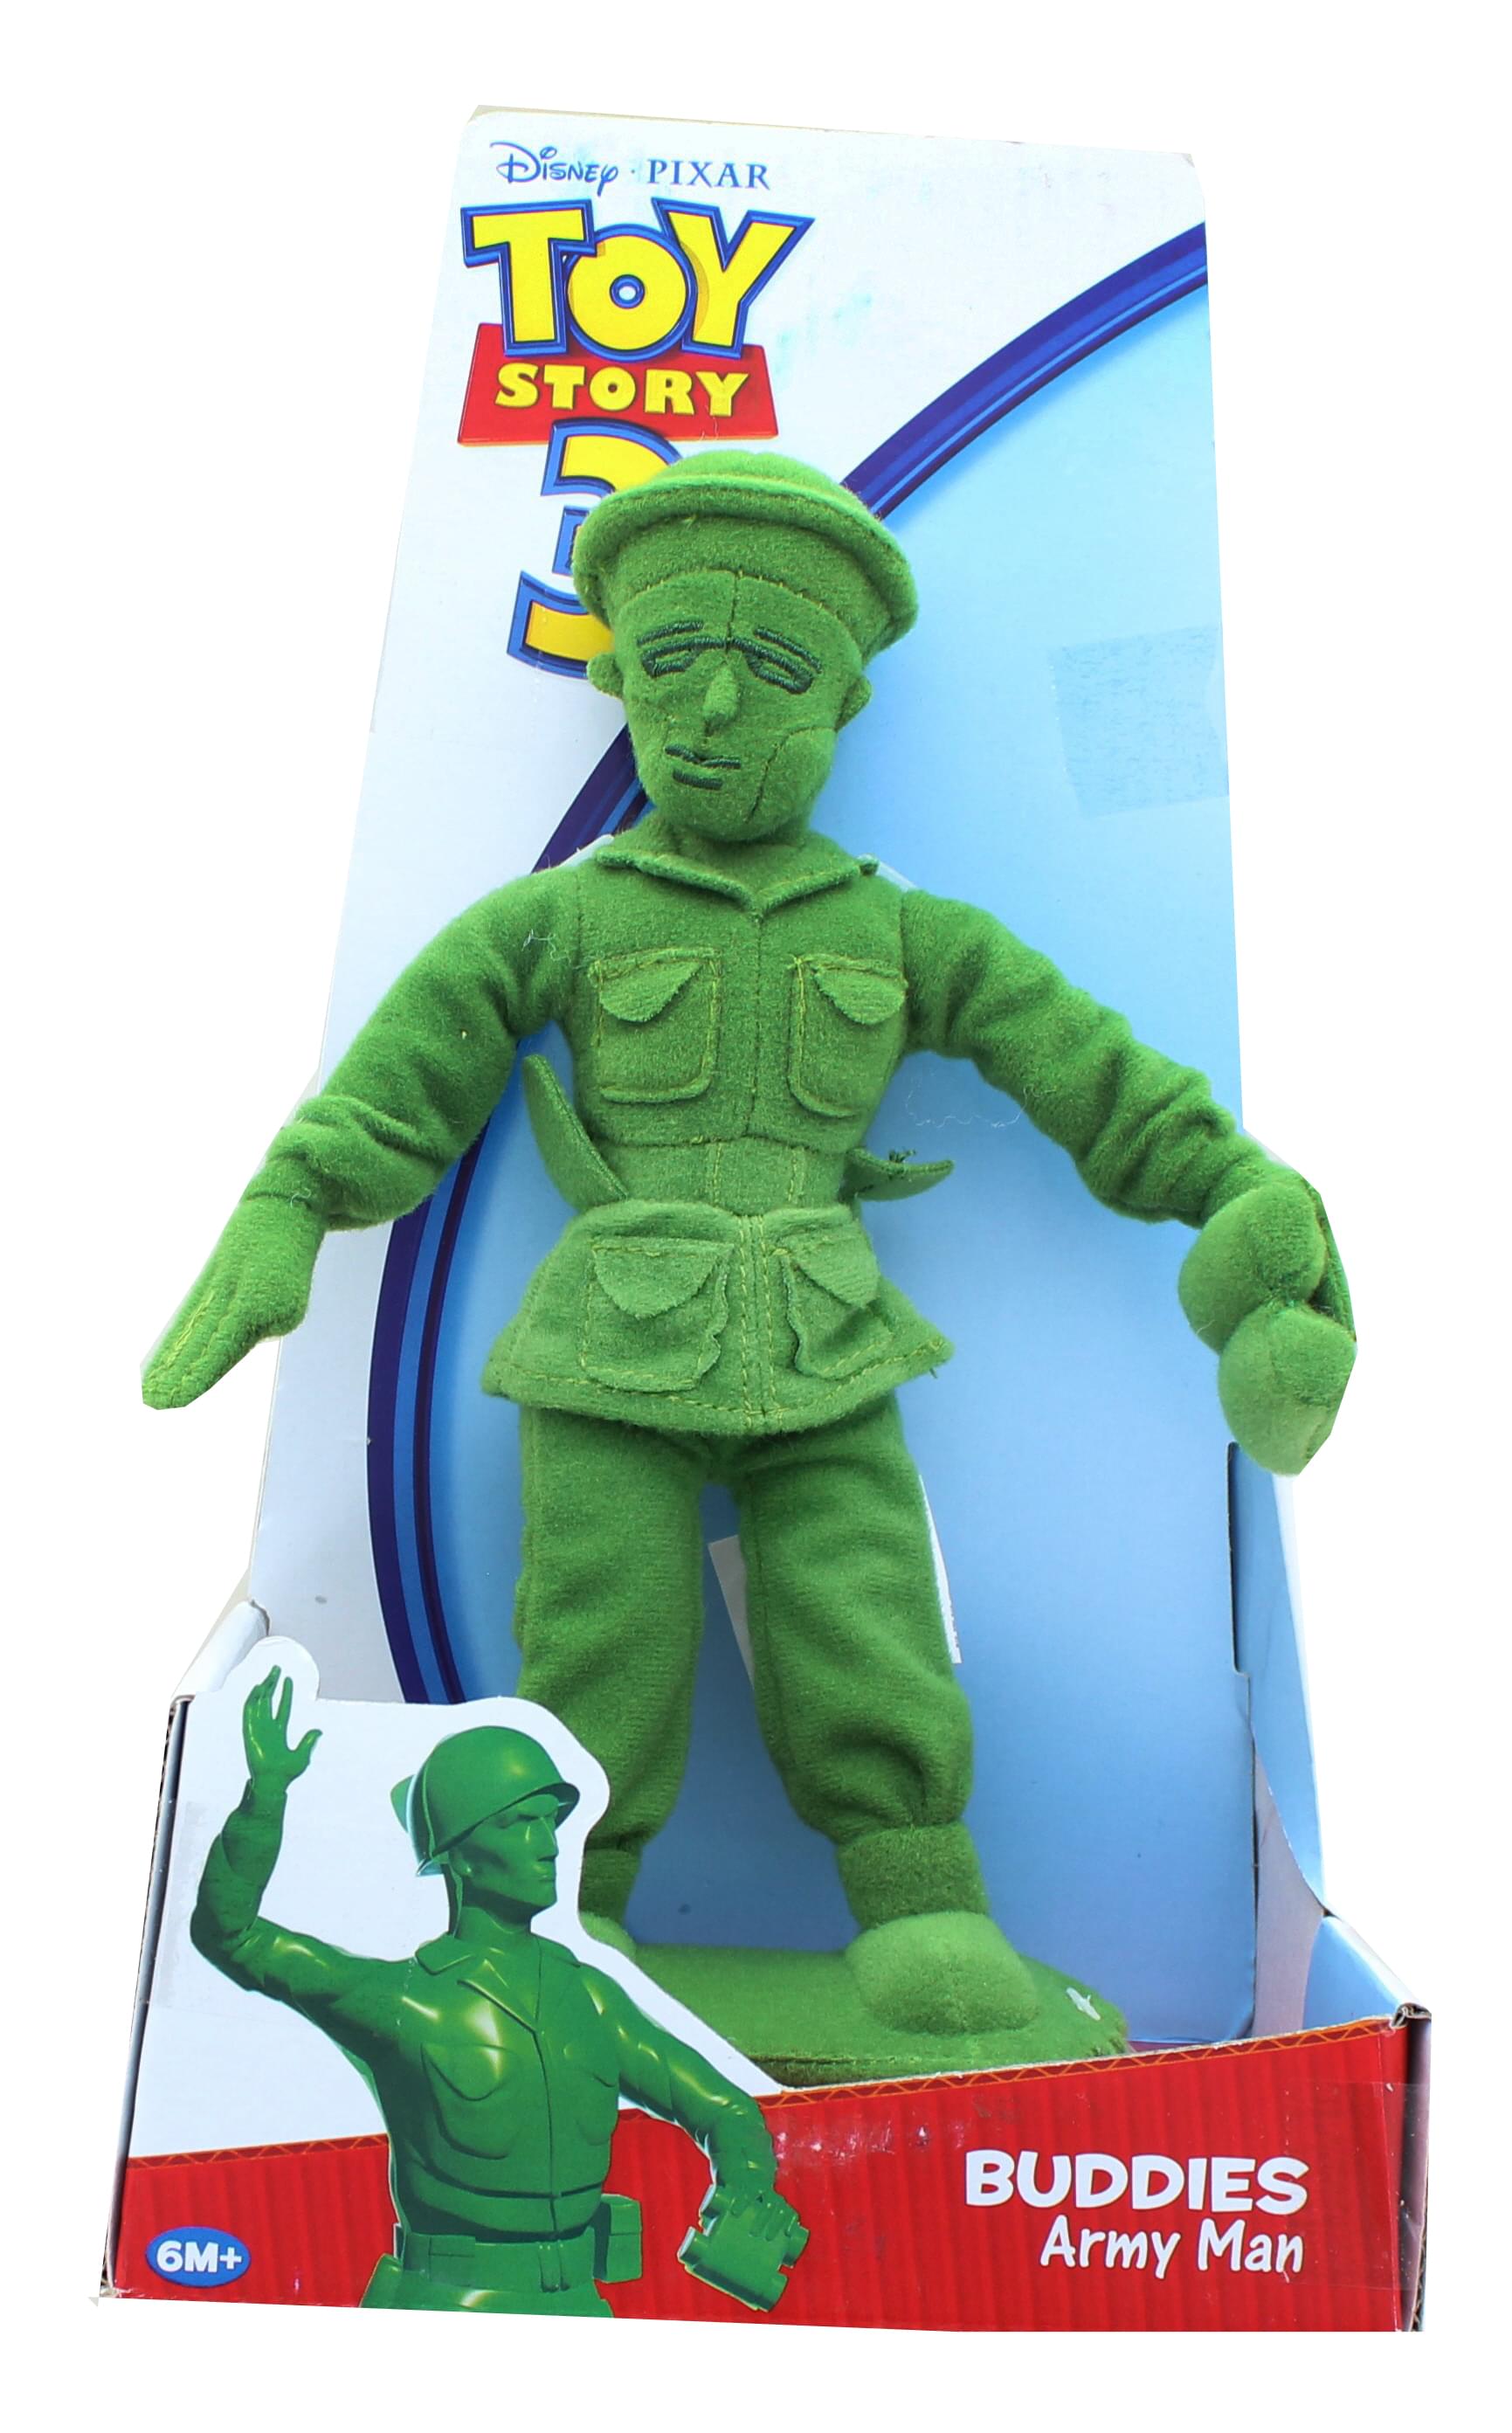 Toy Story 3 Buddies 9 Inch Plush Army Man